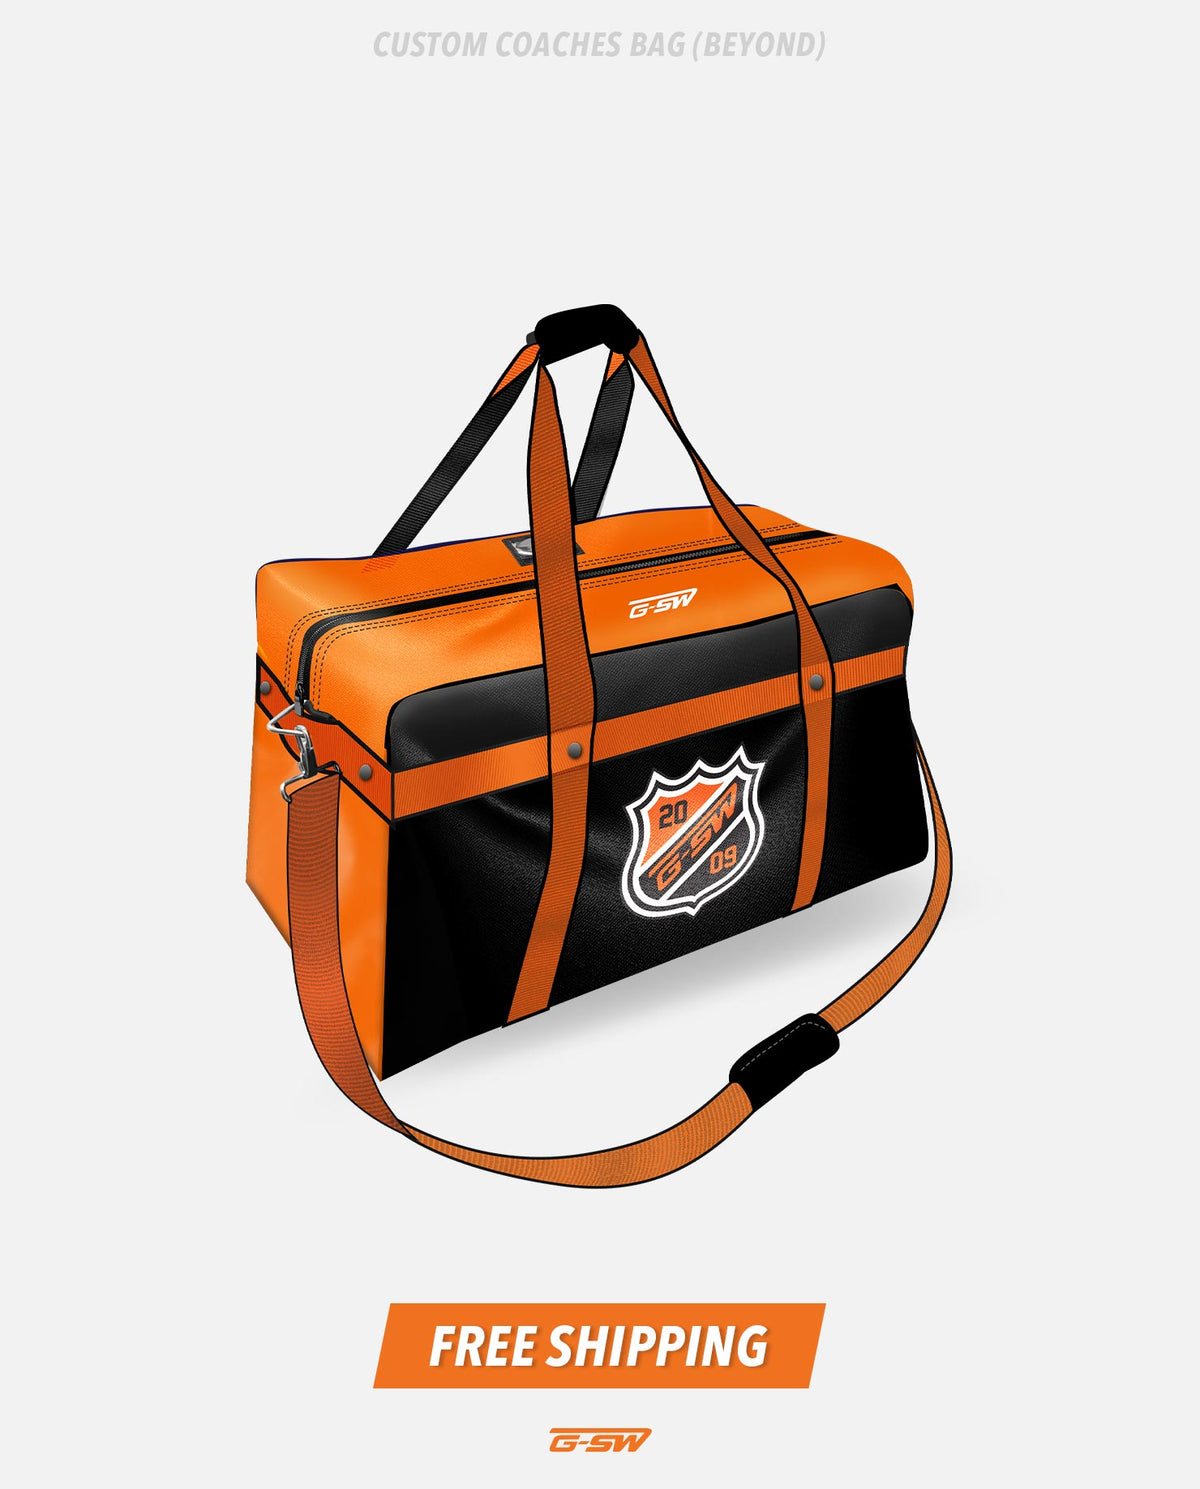 GSW Custom Coaches Bag (Beyond)